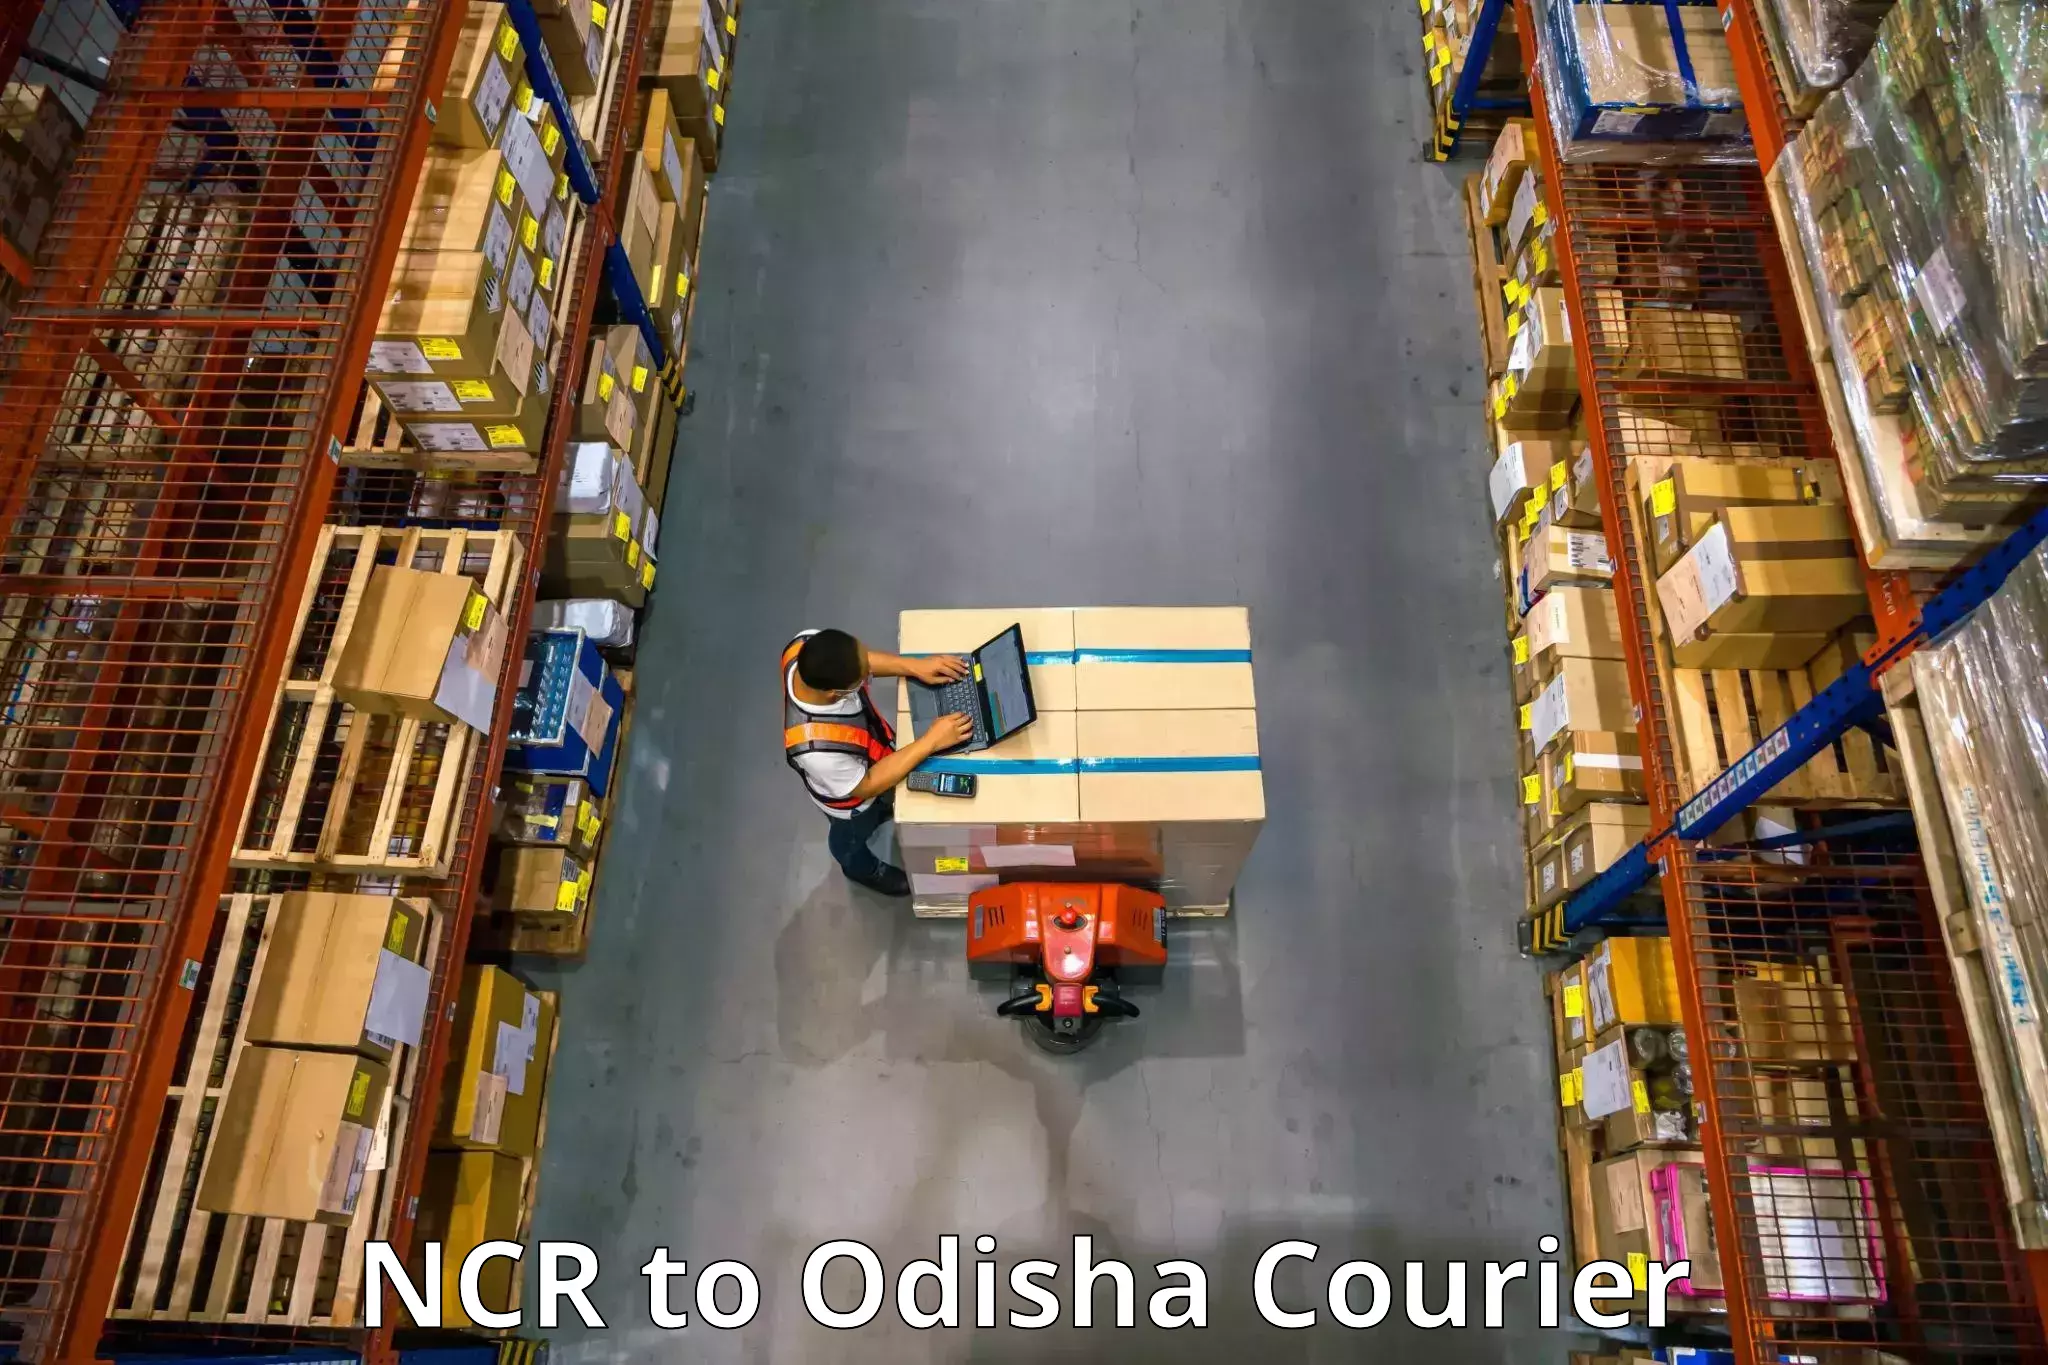 Professional moving company NCR to Sohela